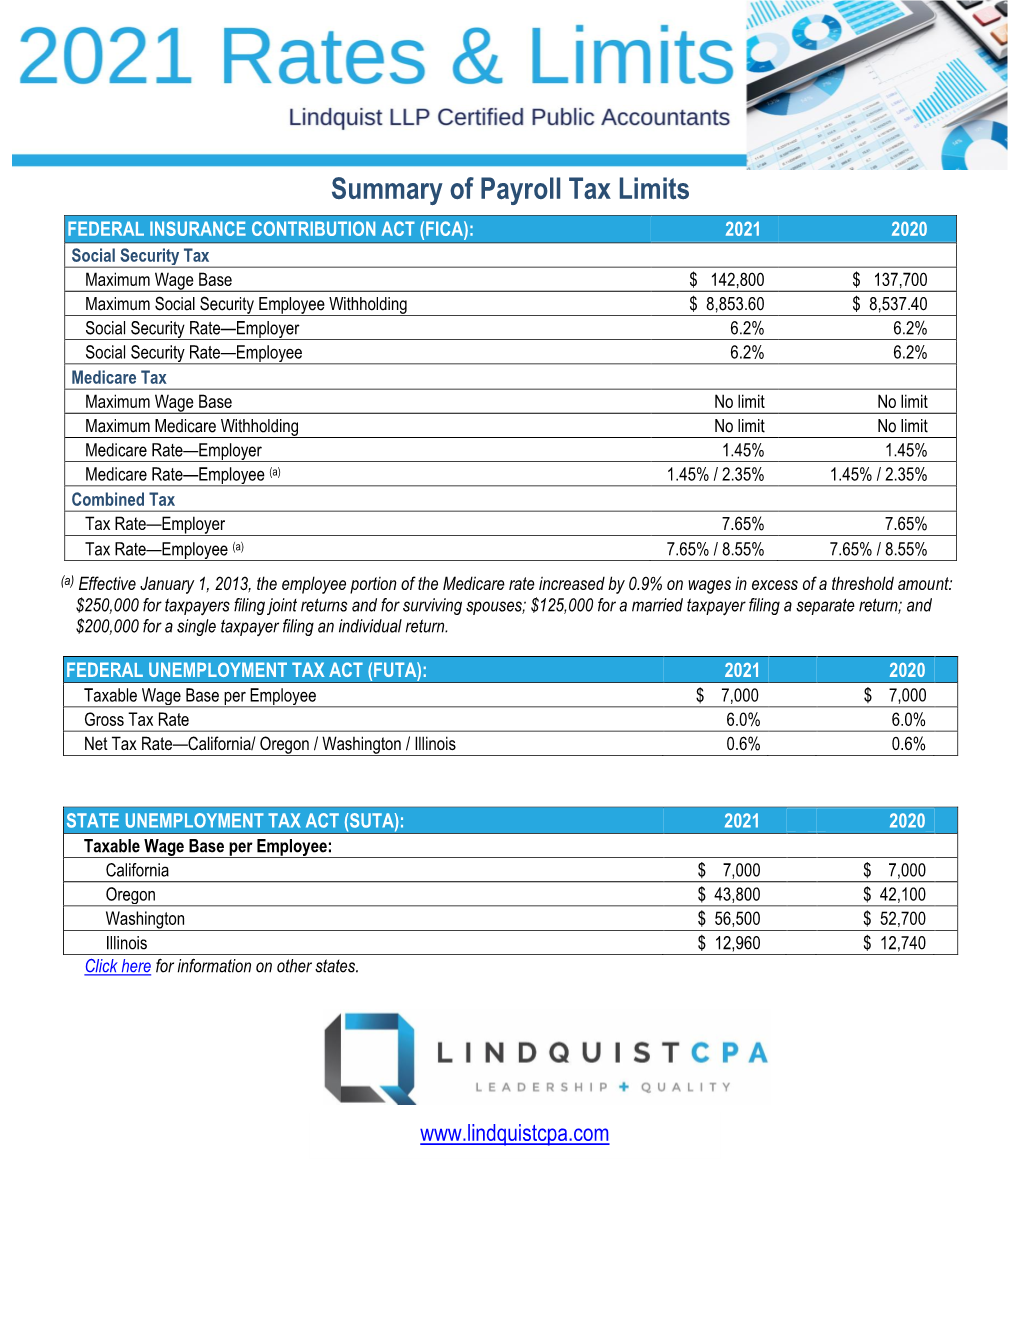 Summary of Payroll Tax Limits